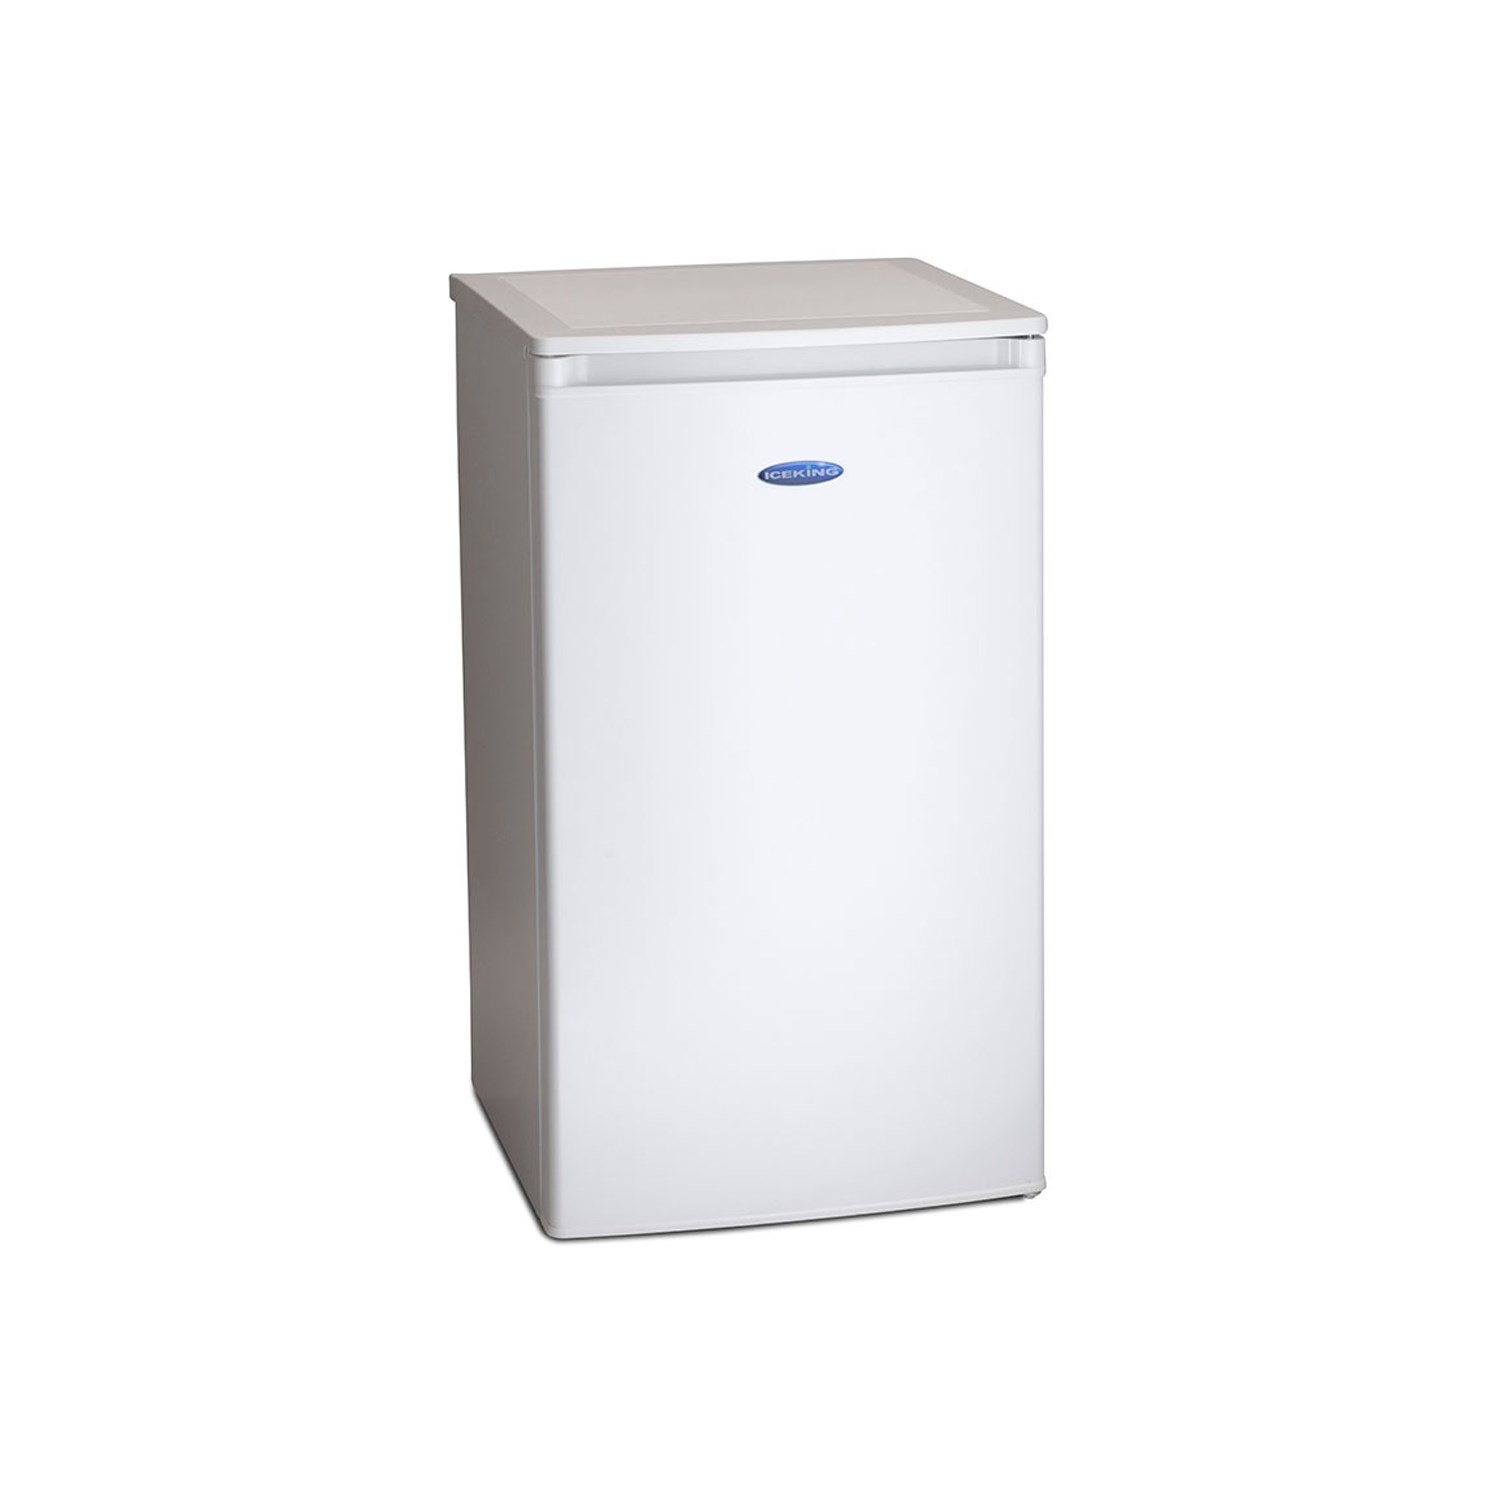 Iceking Reversible Door Freezer - White - A+ Energy Rated - 0